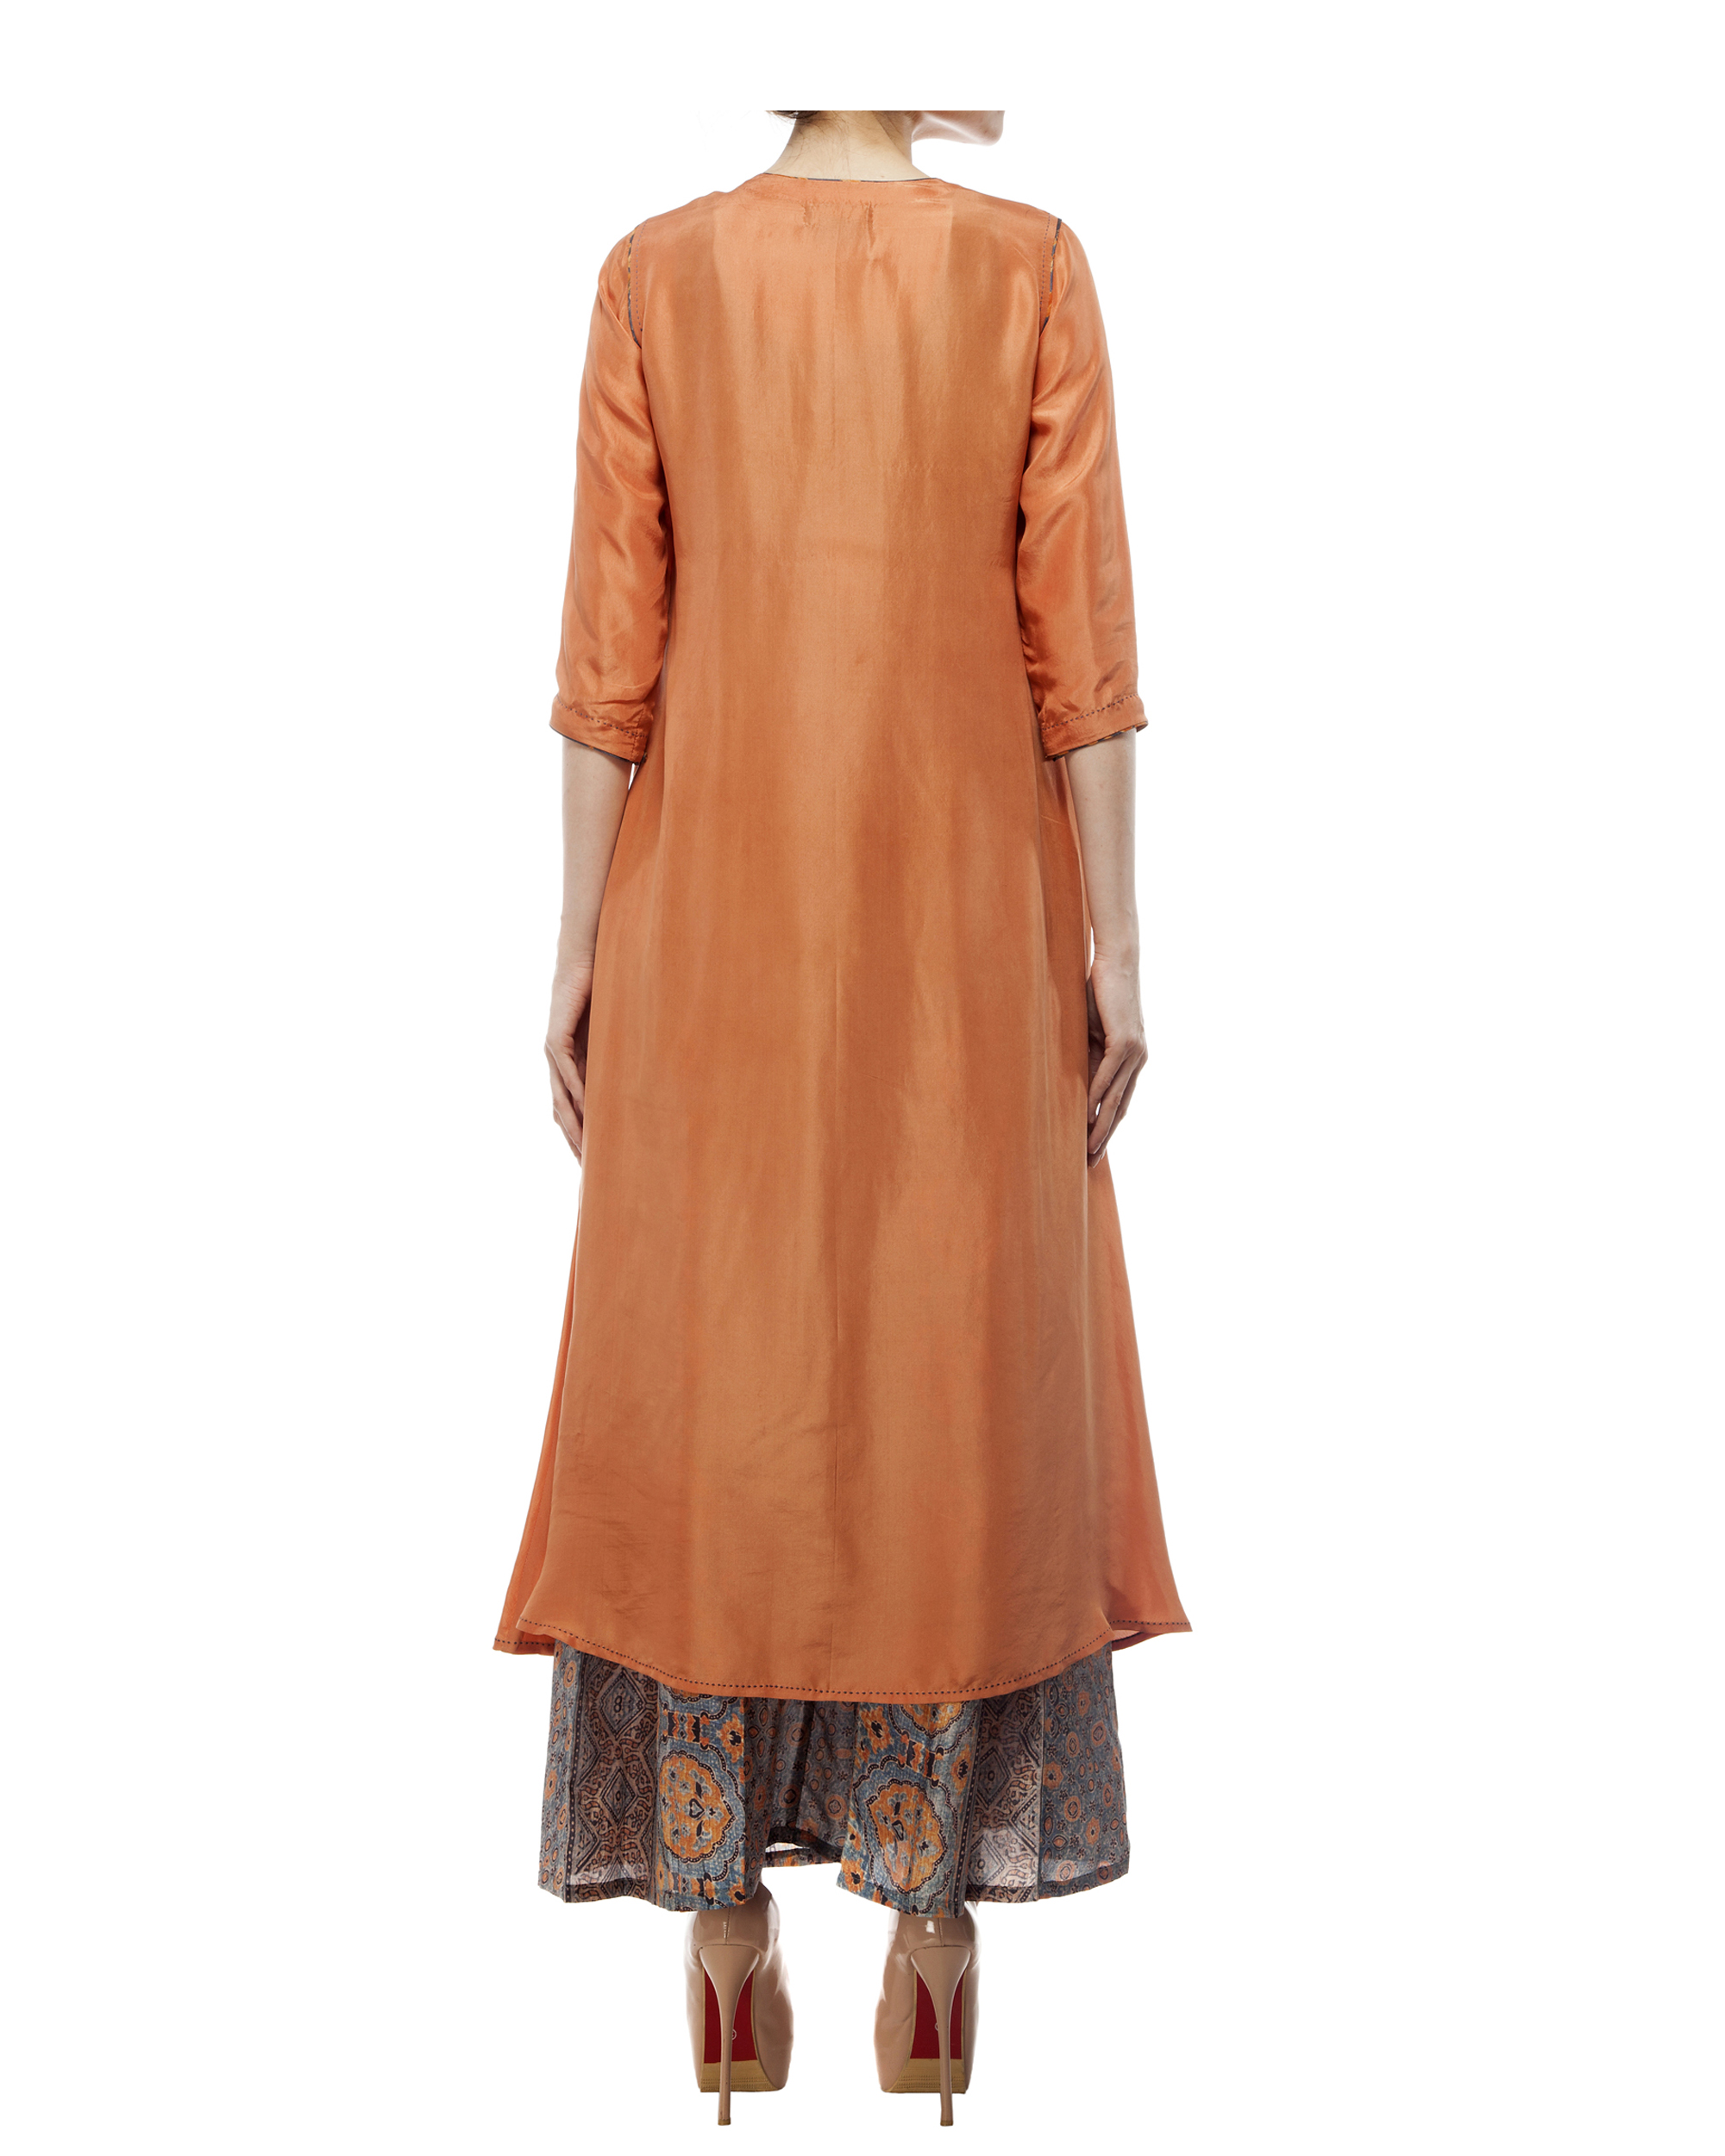 Dusty Orange Silk Tunic By Divyam Mehta The Secret Label 4612